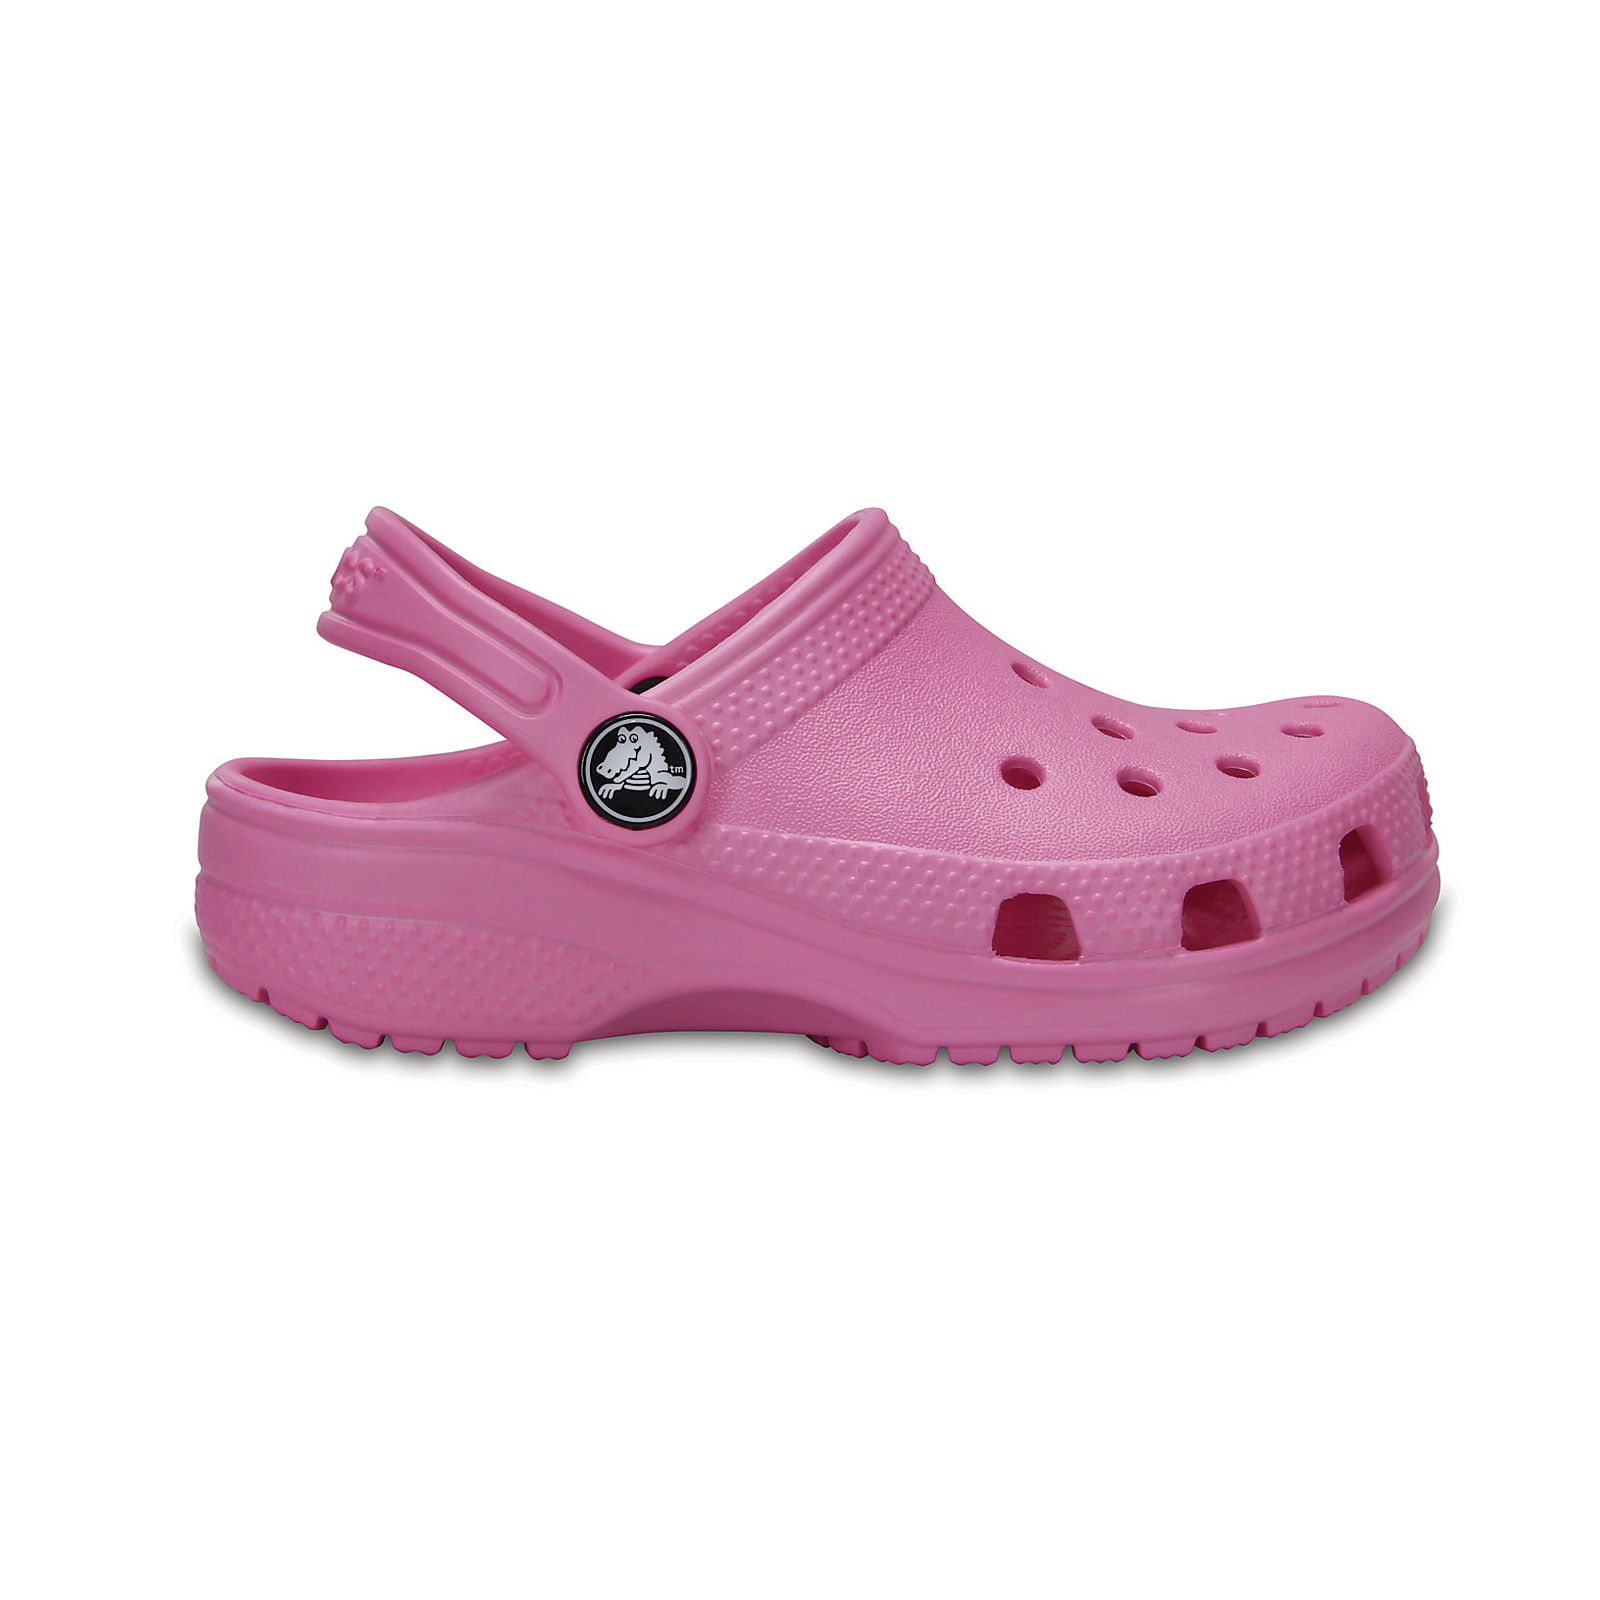 Crocs - CLASSIC CLOG K - CARNATION Παιδικά > Παπούτσια > Clogs > Glogs